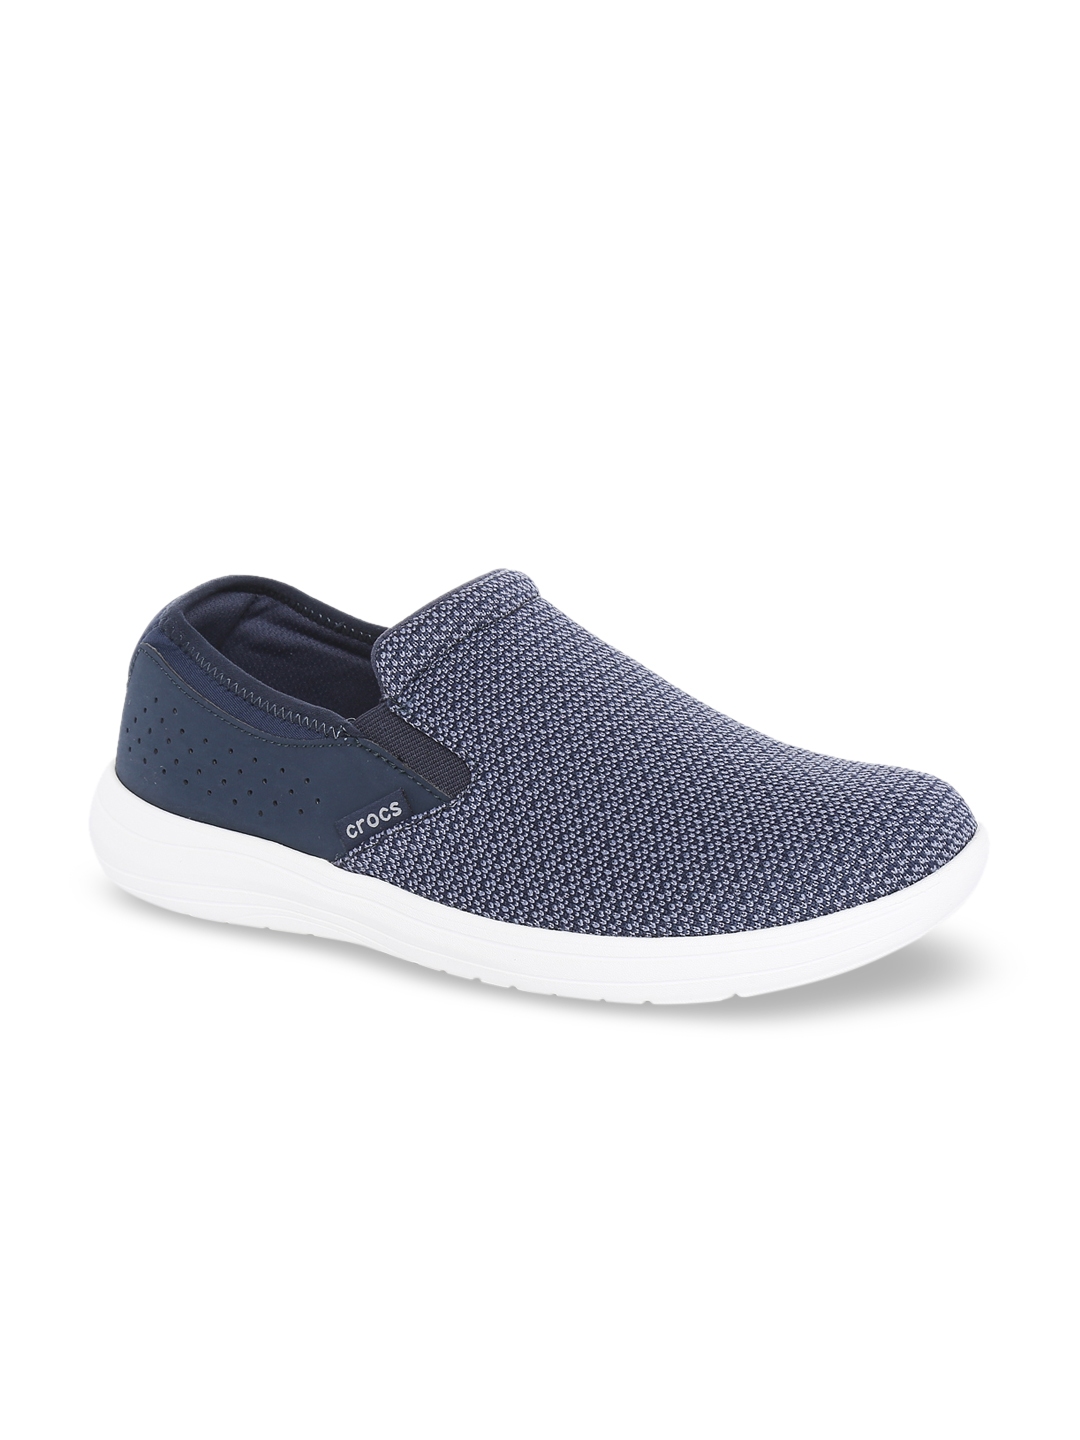 Buy Crocs Reviva Men Navy Blue Solid Slip On Sneakers - Casual Shoes ...